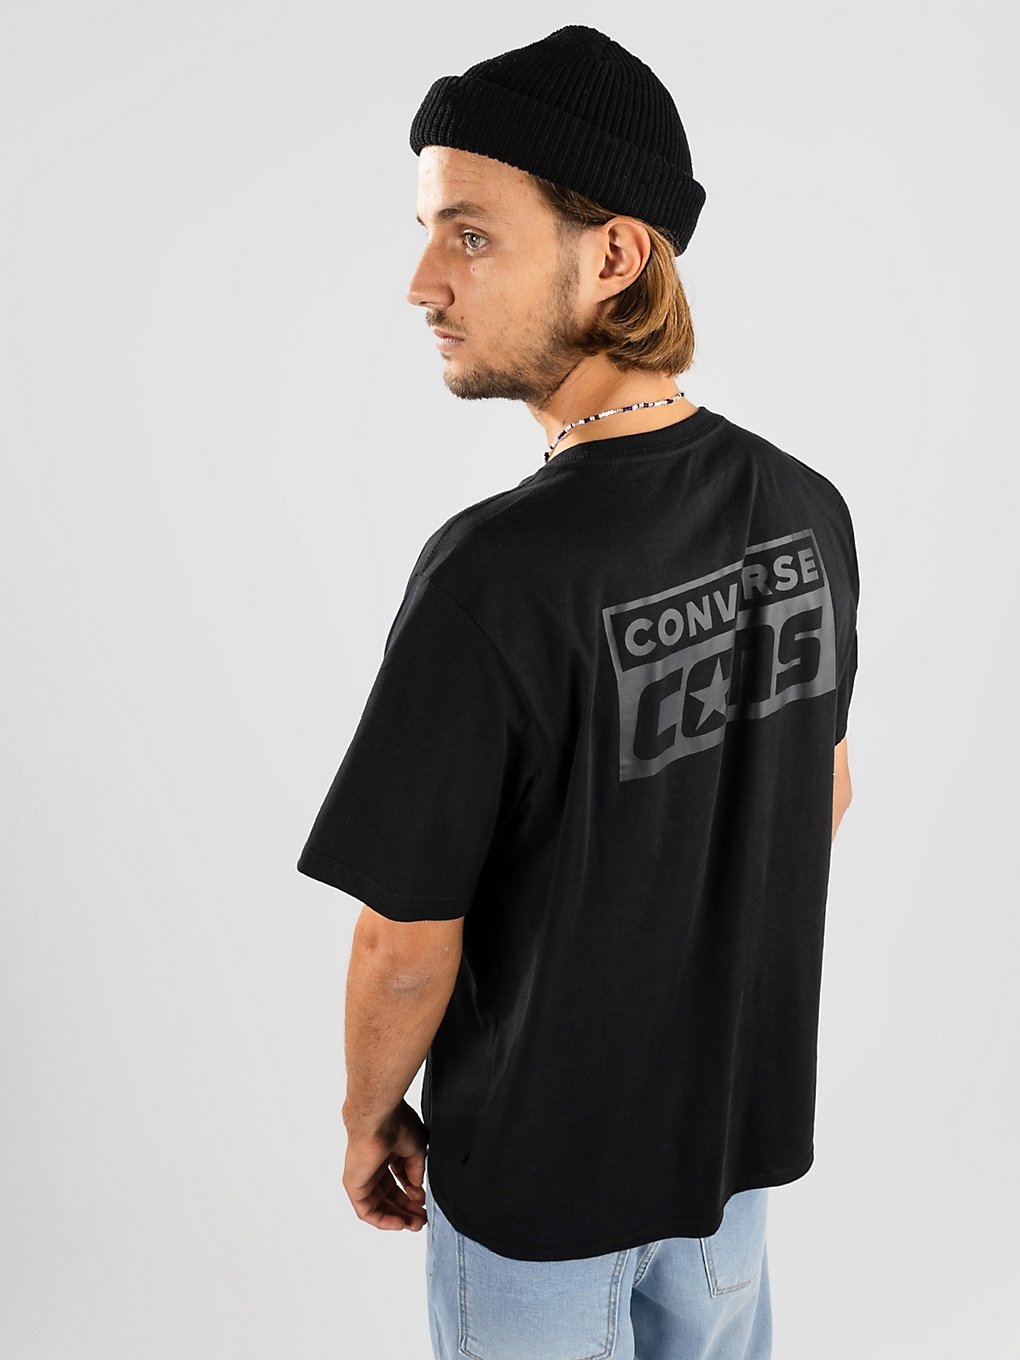 Converse Cons T-Shirt black kaufen